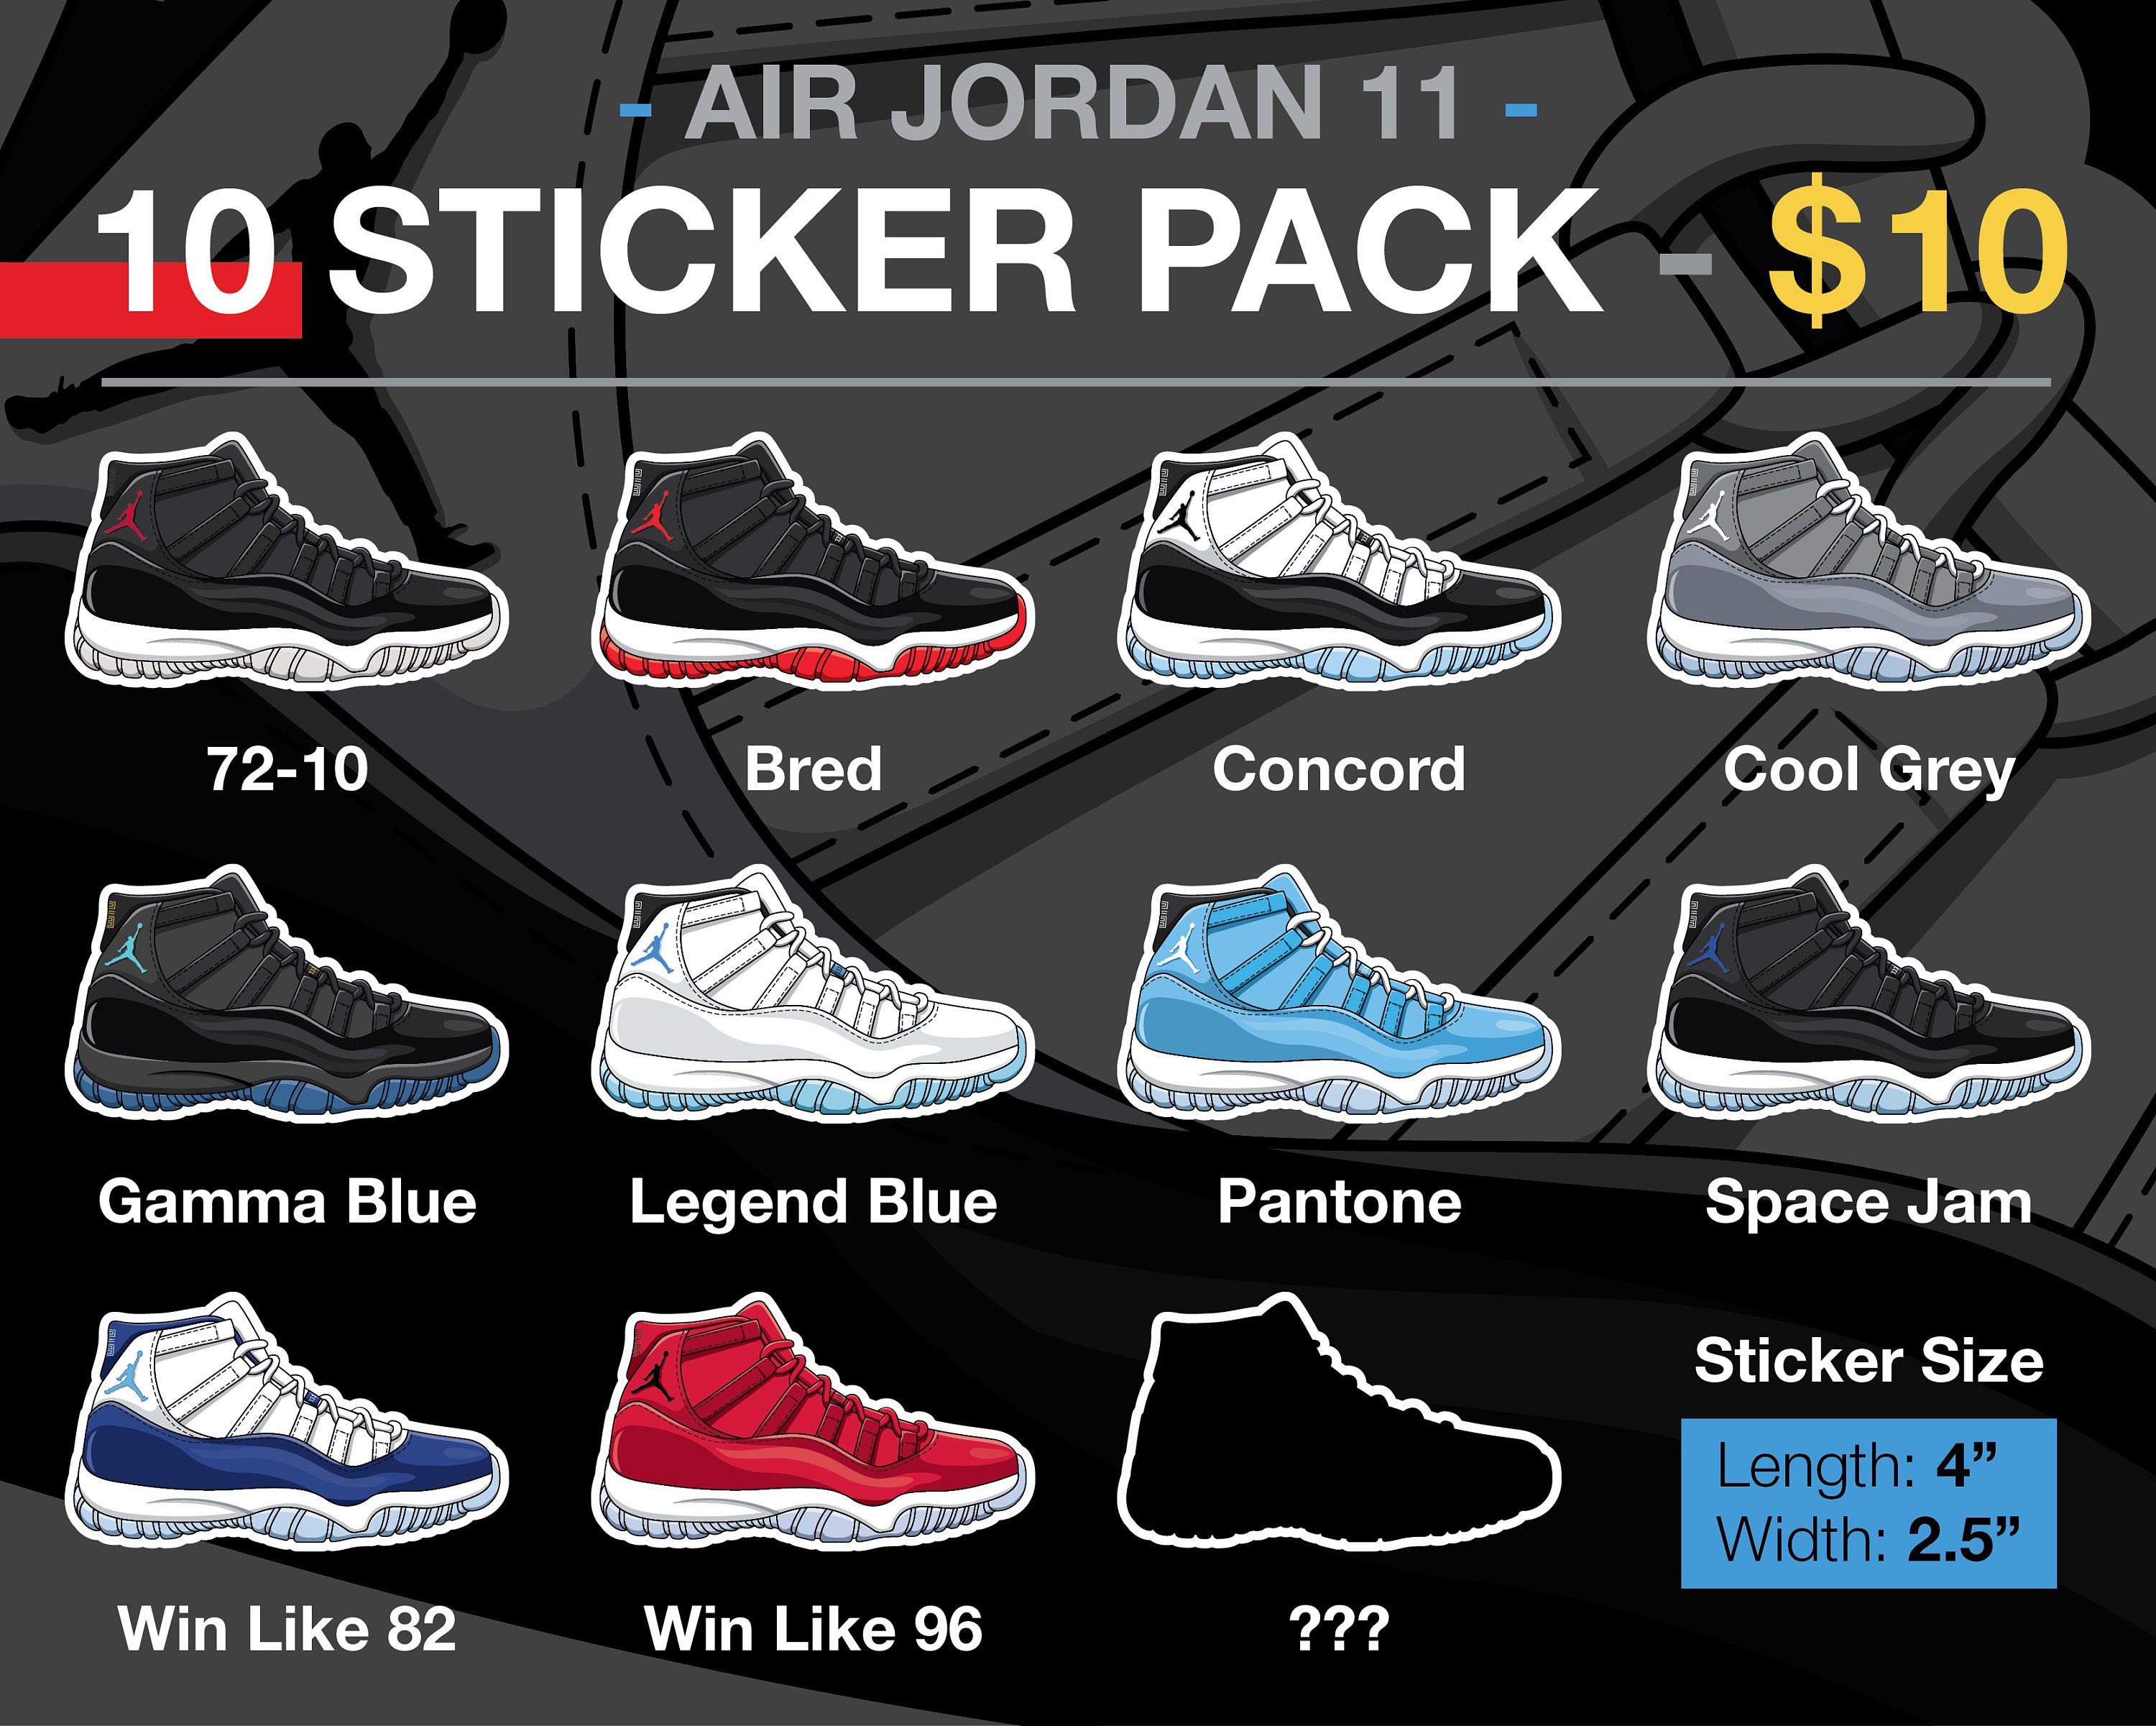 Air Jordan 11 Sticker Pack - Etsy